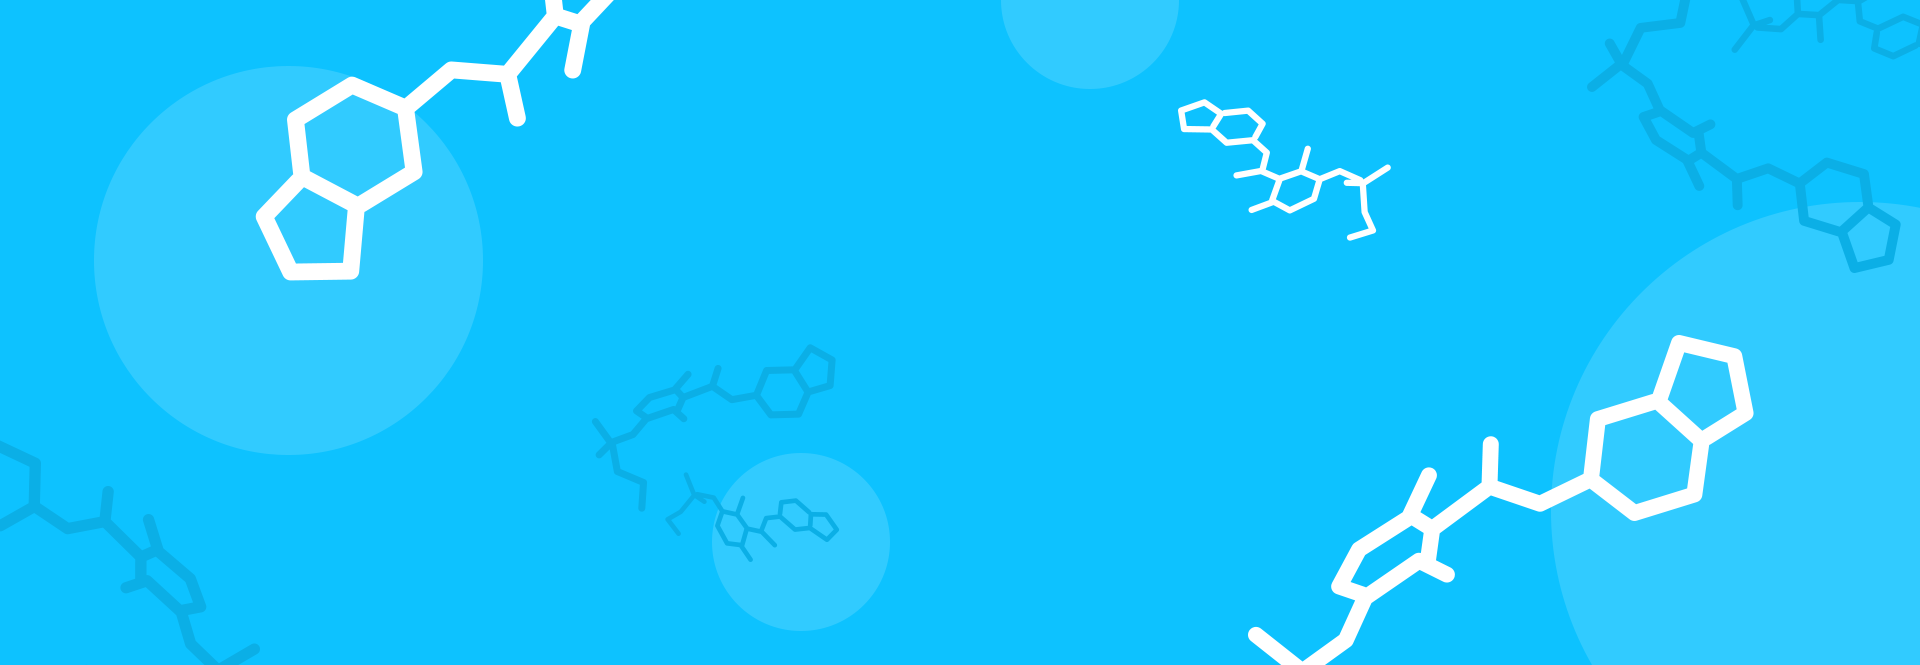 General molecules in cyan background